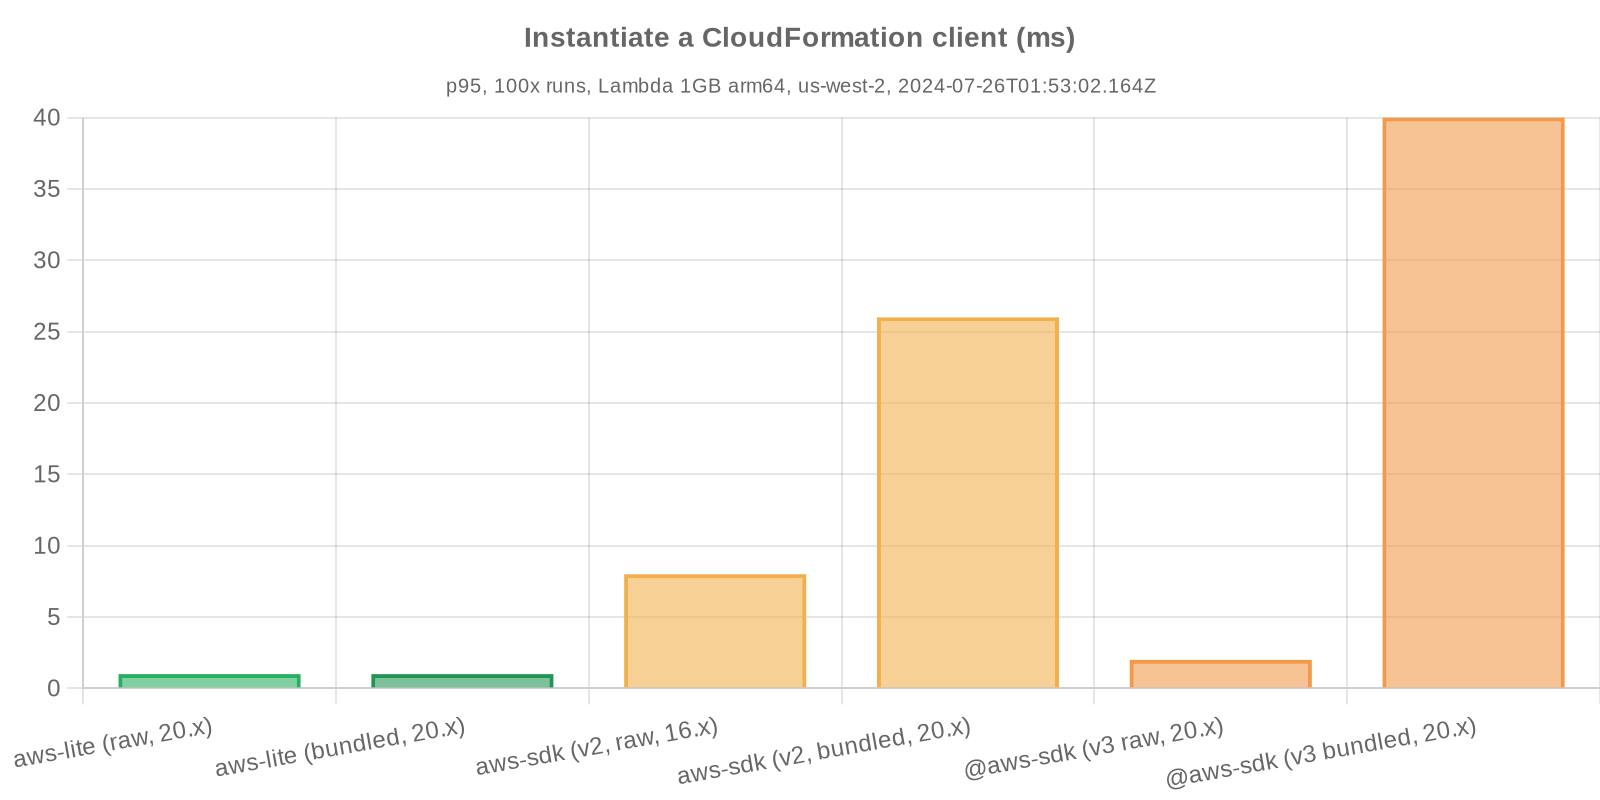 Benchmark statistics - Instantiate a CloudFormation client